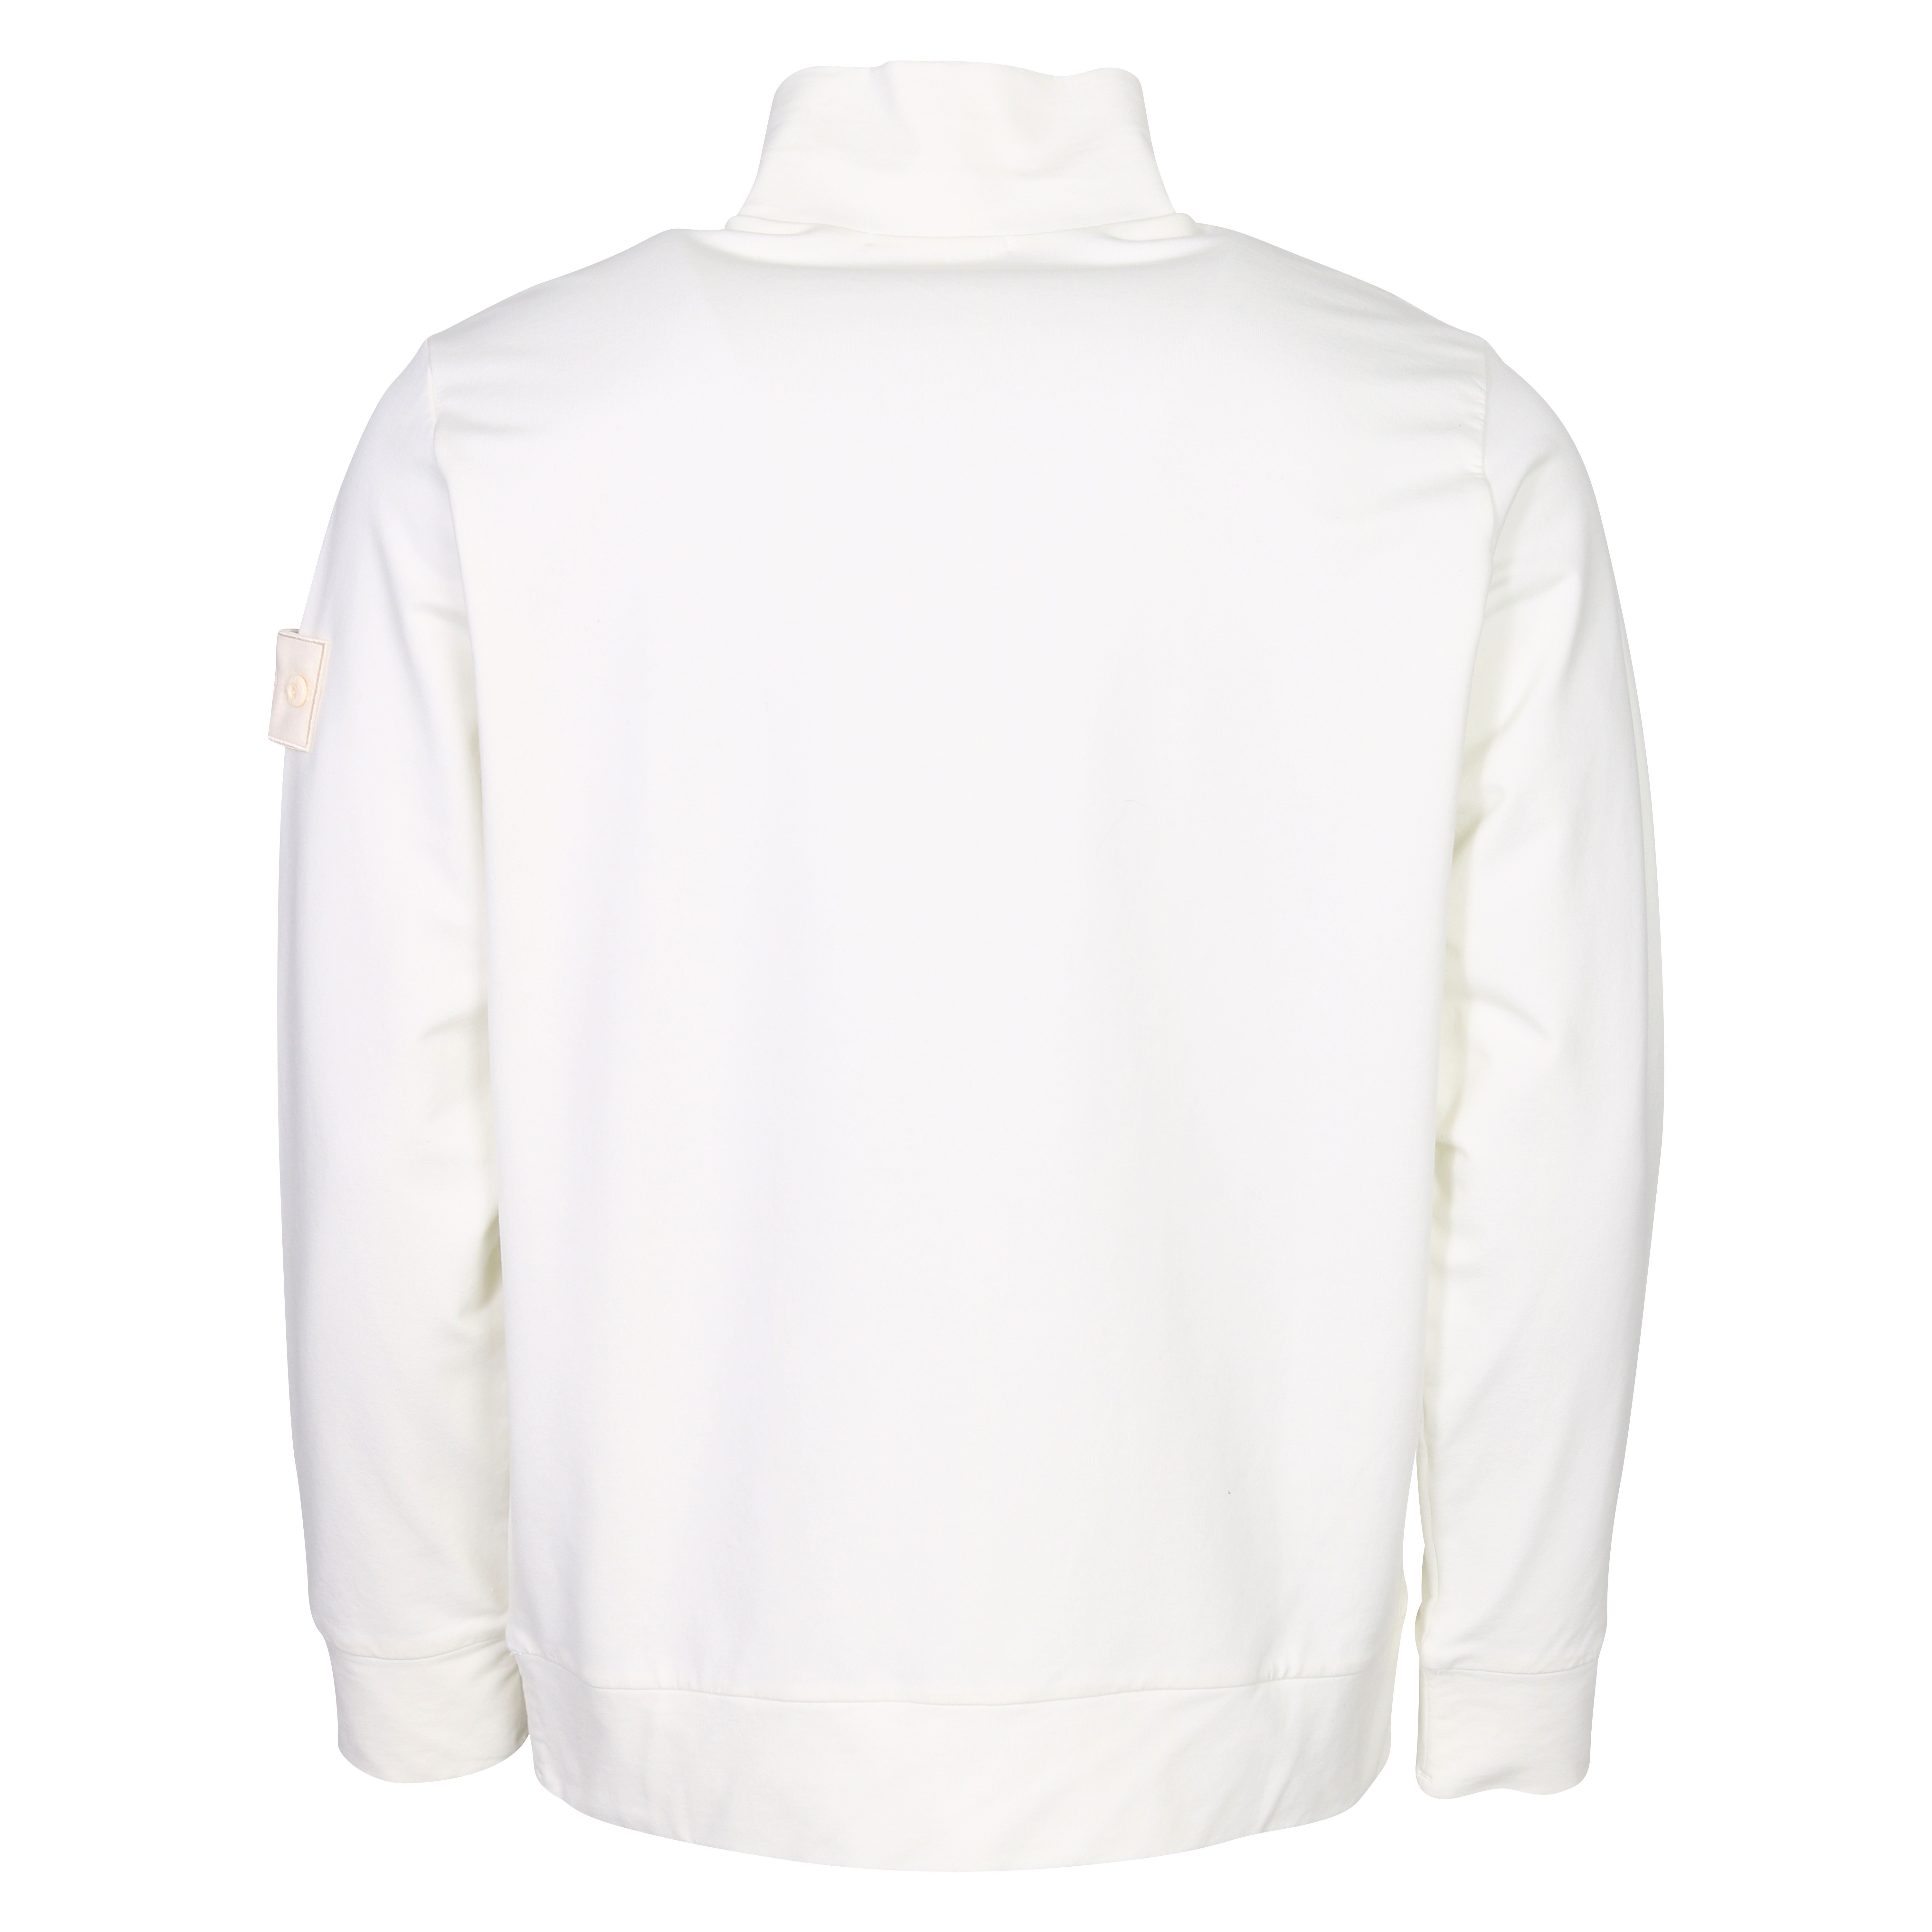 Stone Island Ghost Piece Zip Sweater in Off White XL